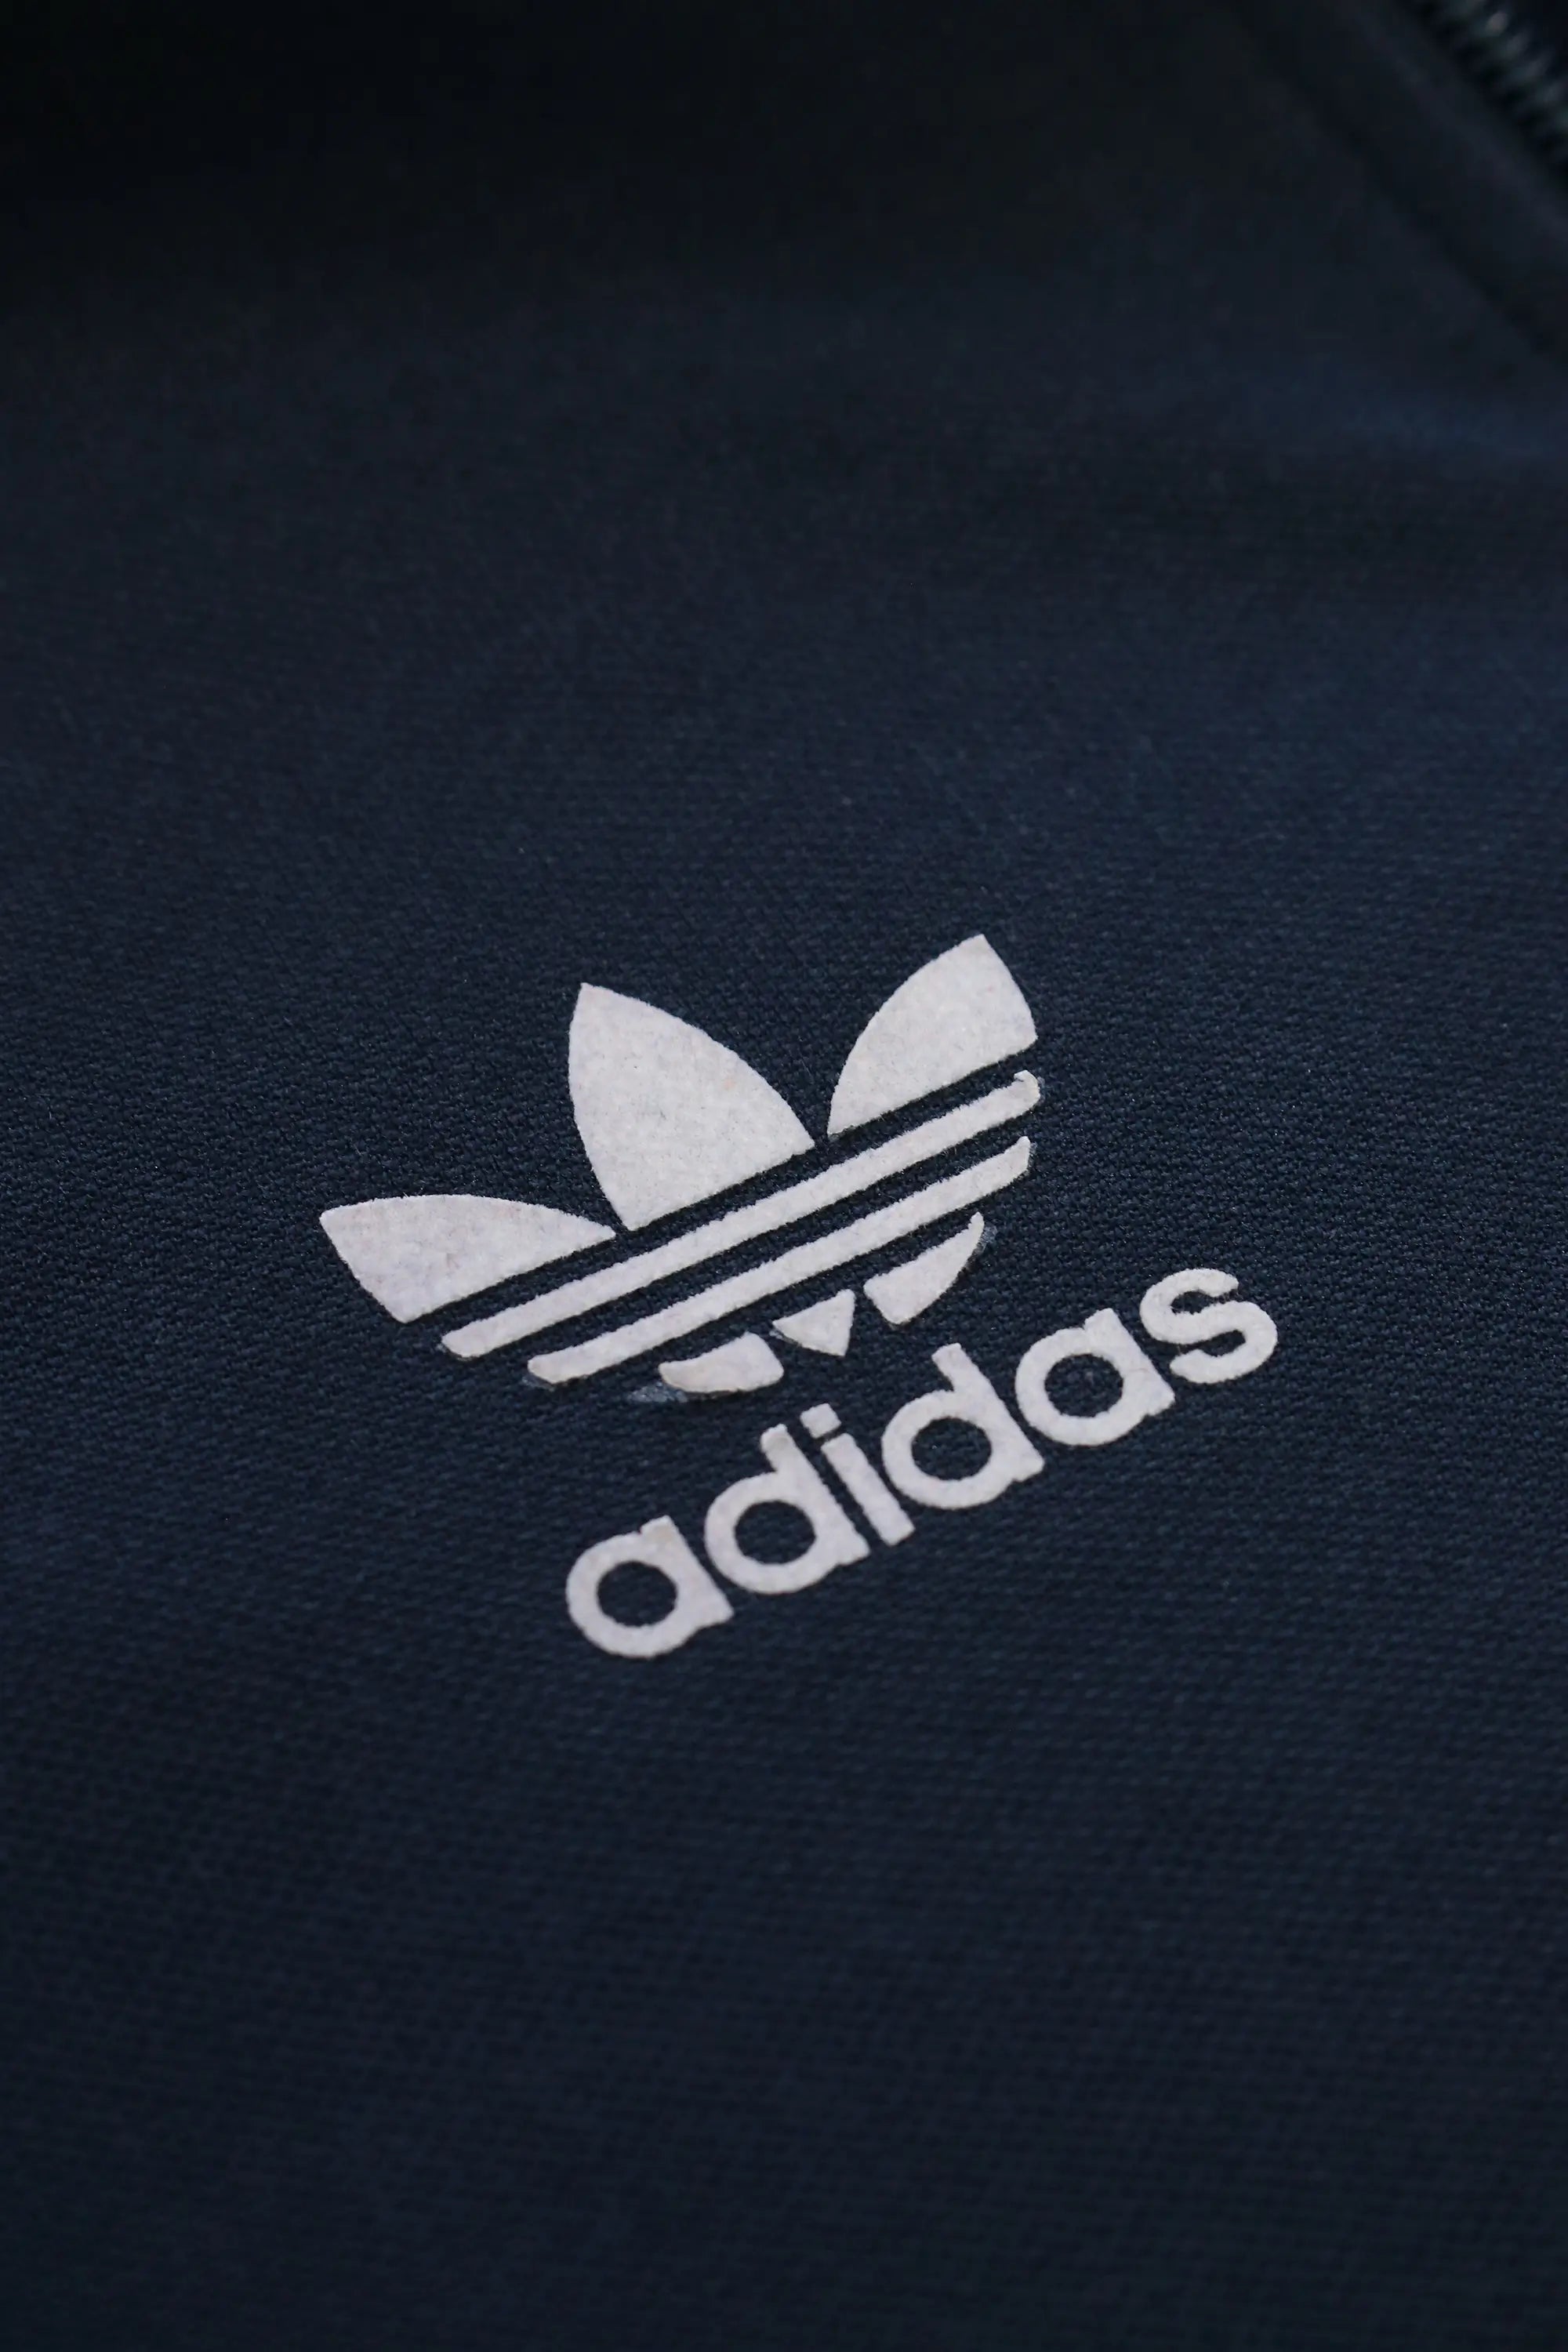 Adidas '04 Beckenbauer Trackjacket